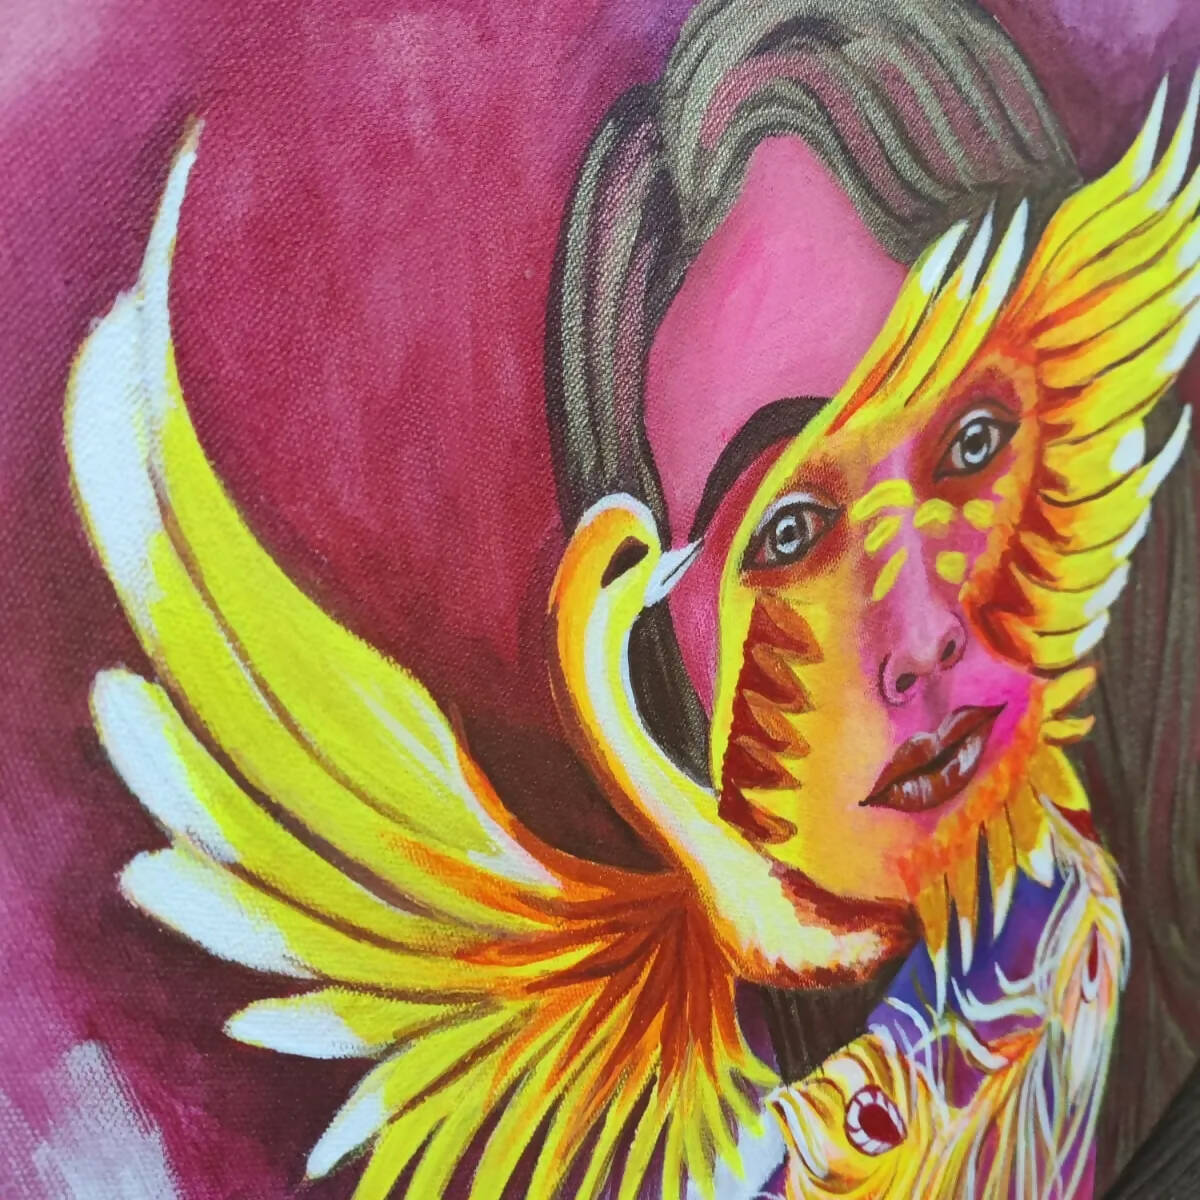 The Phoenix bird